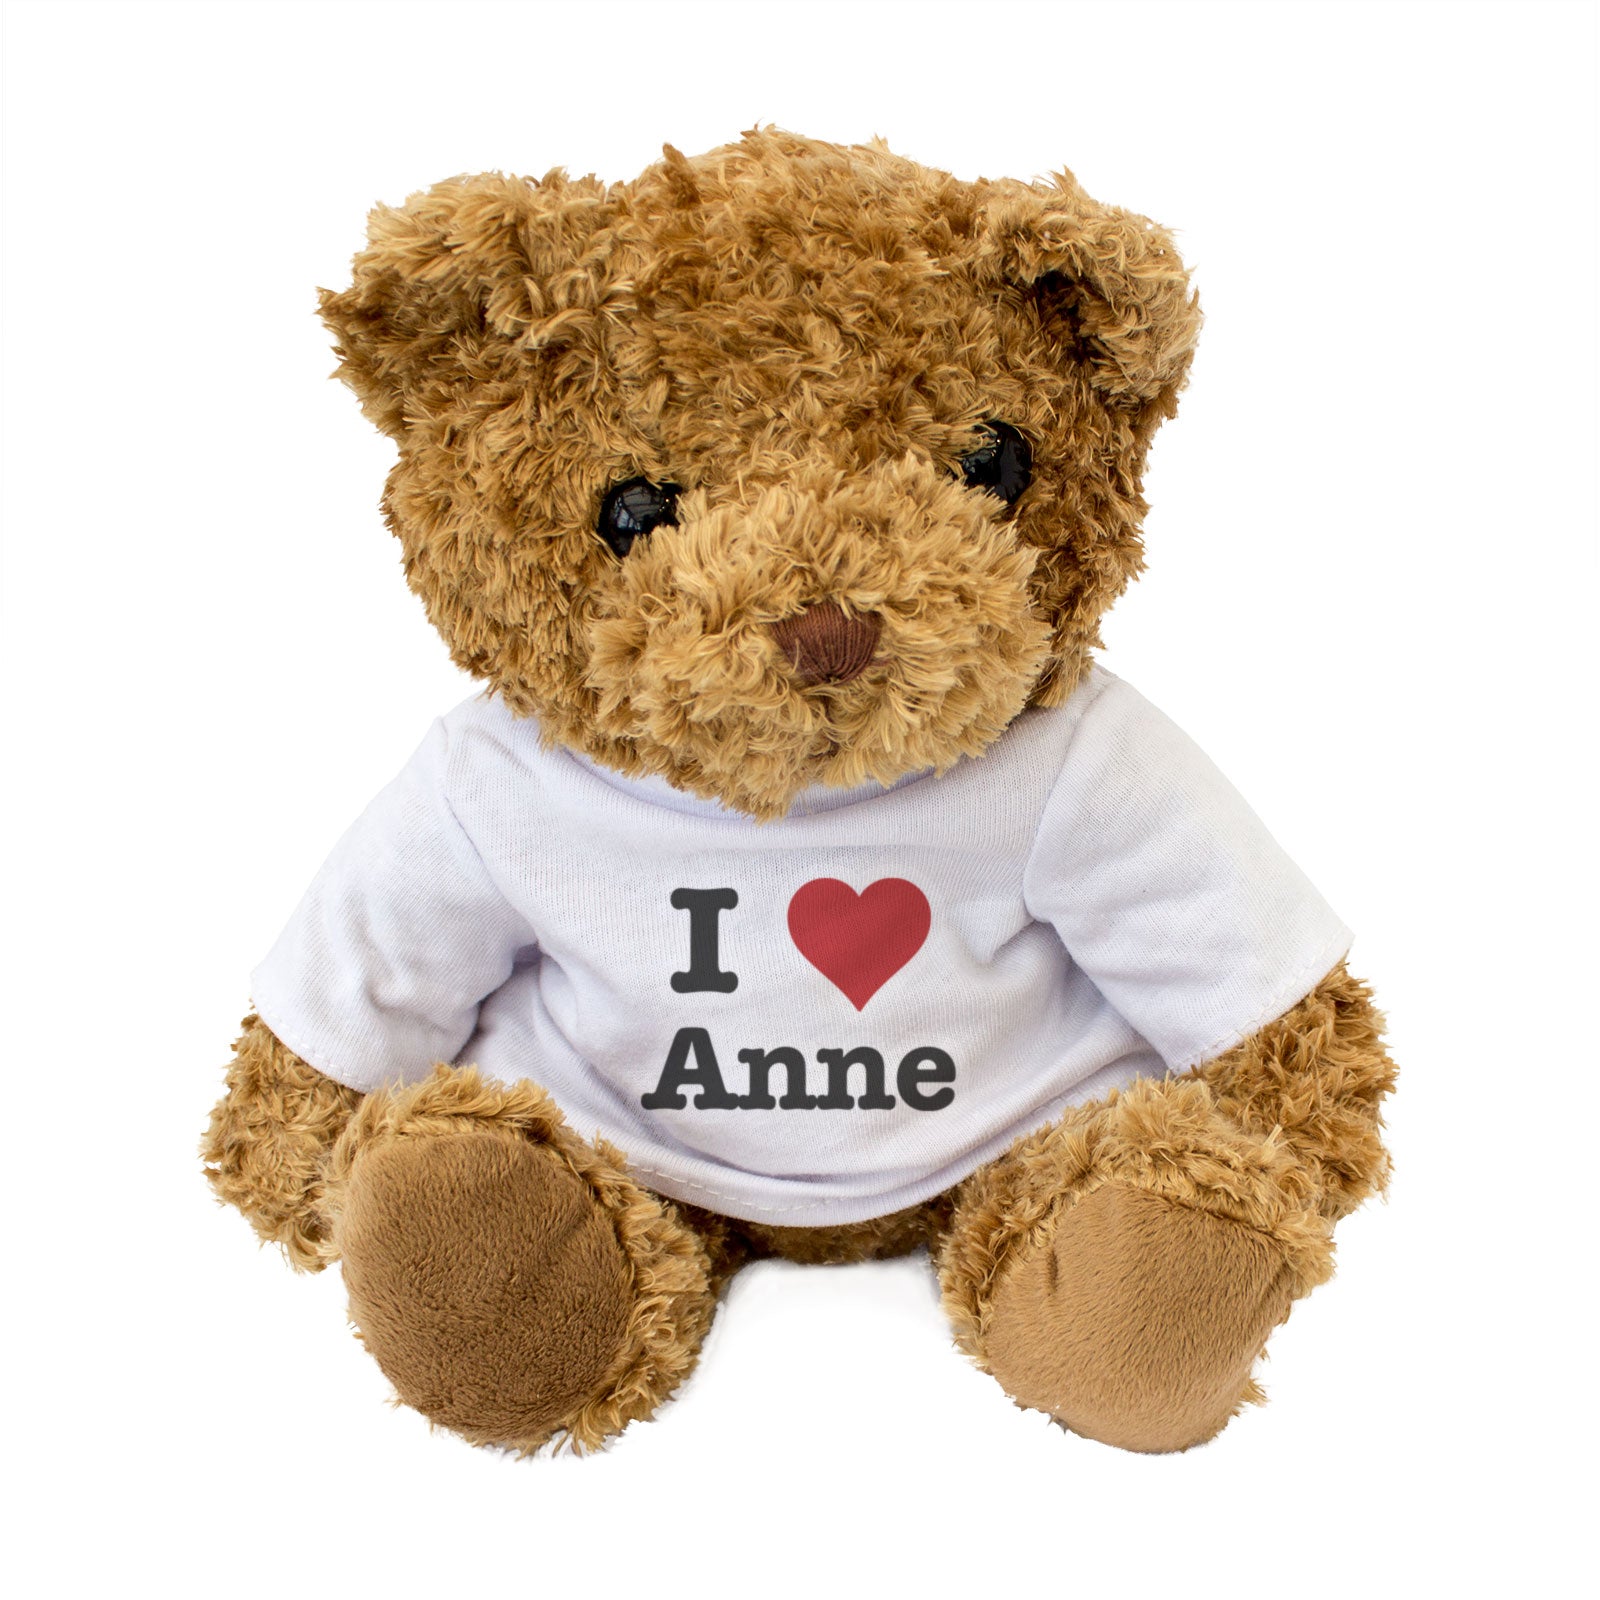 I Love Anne - Teddy Bear